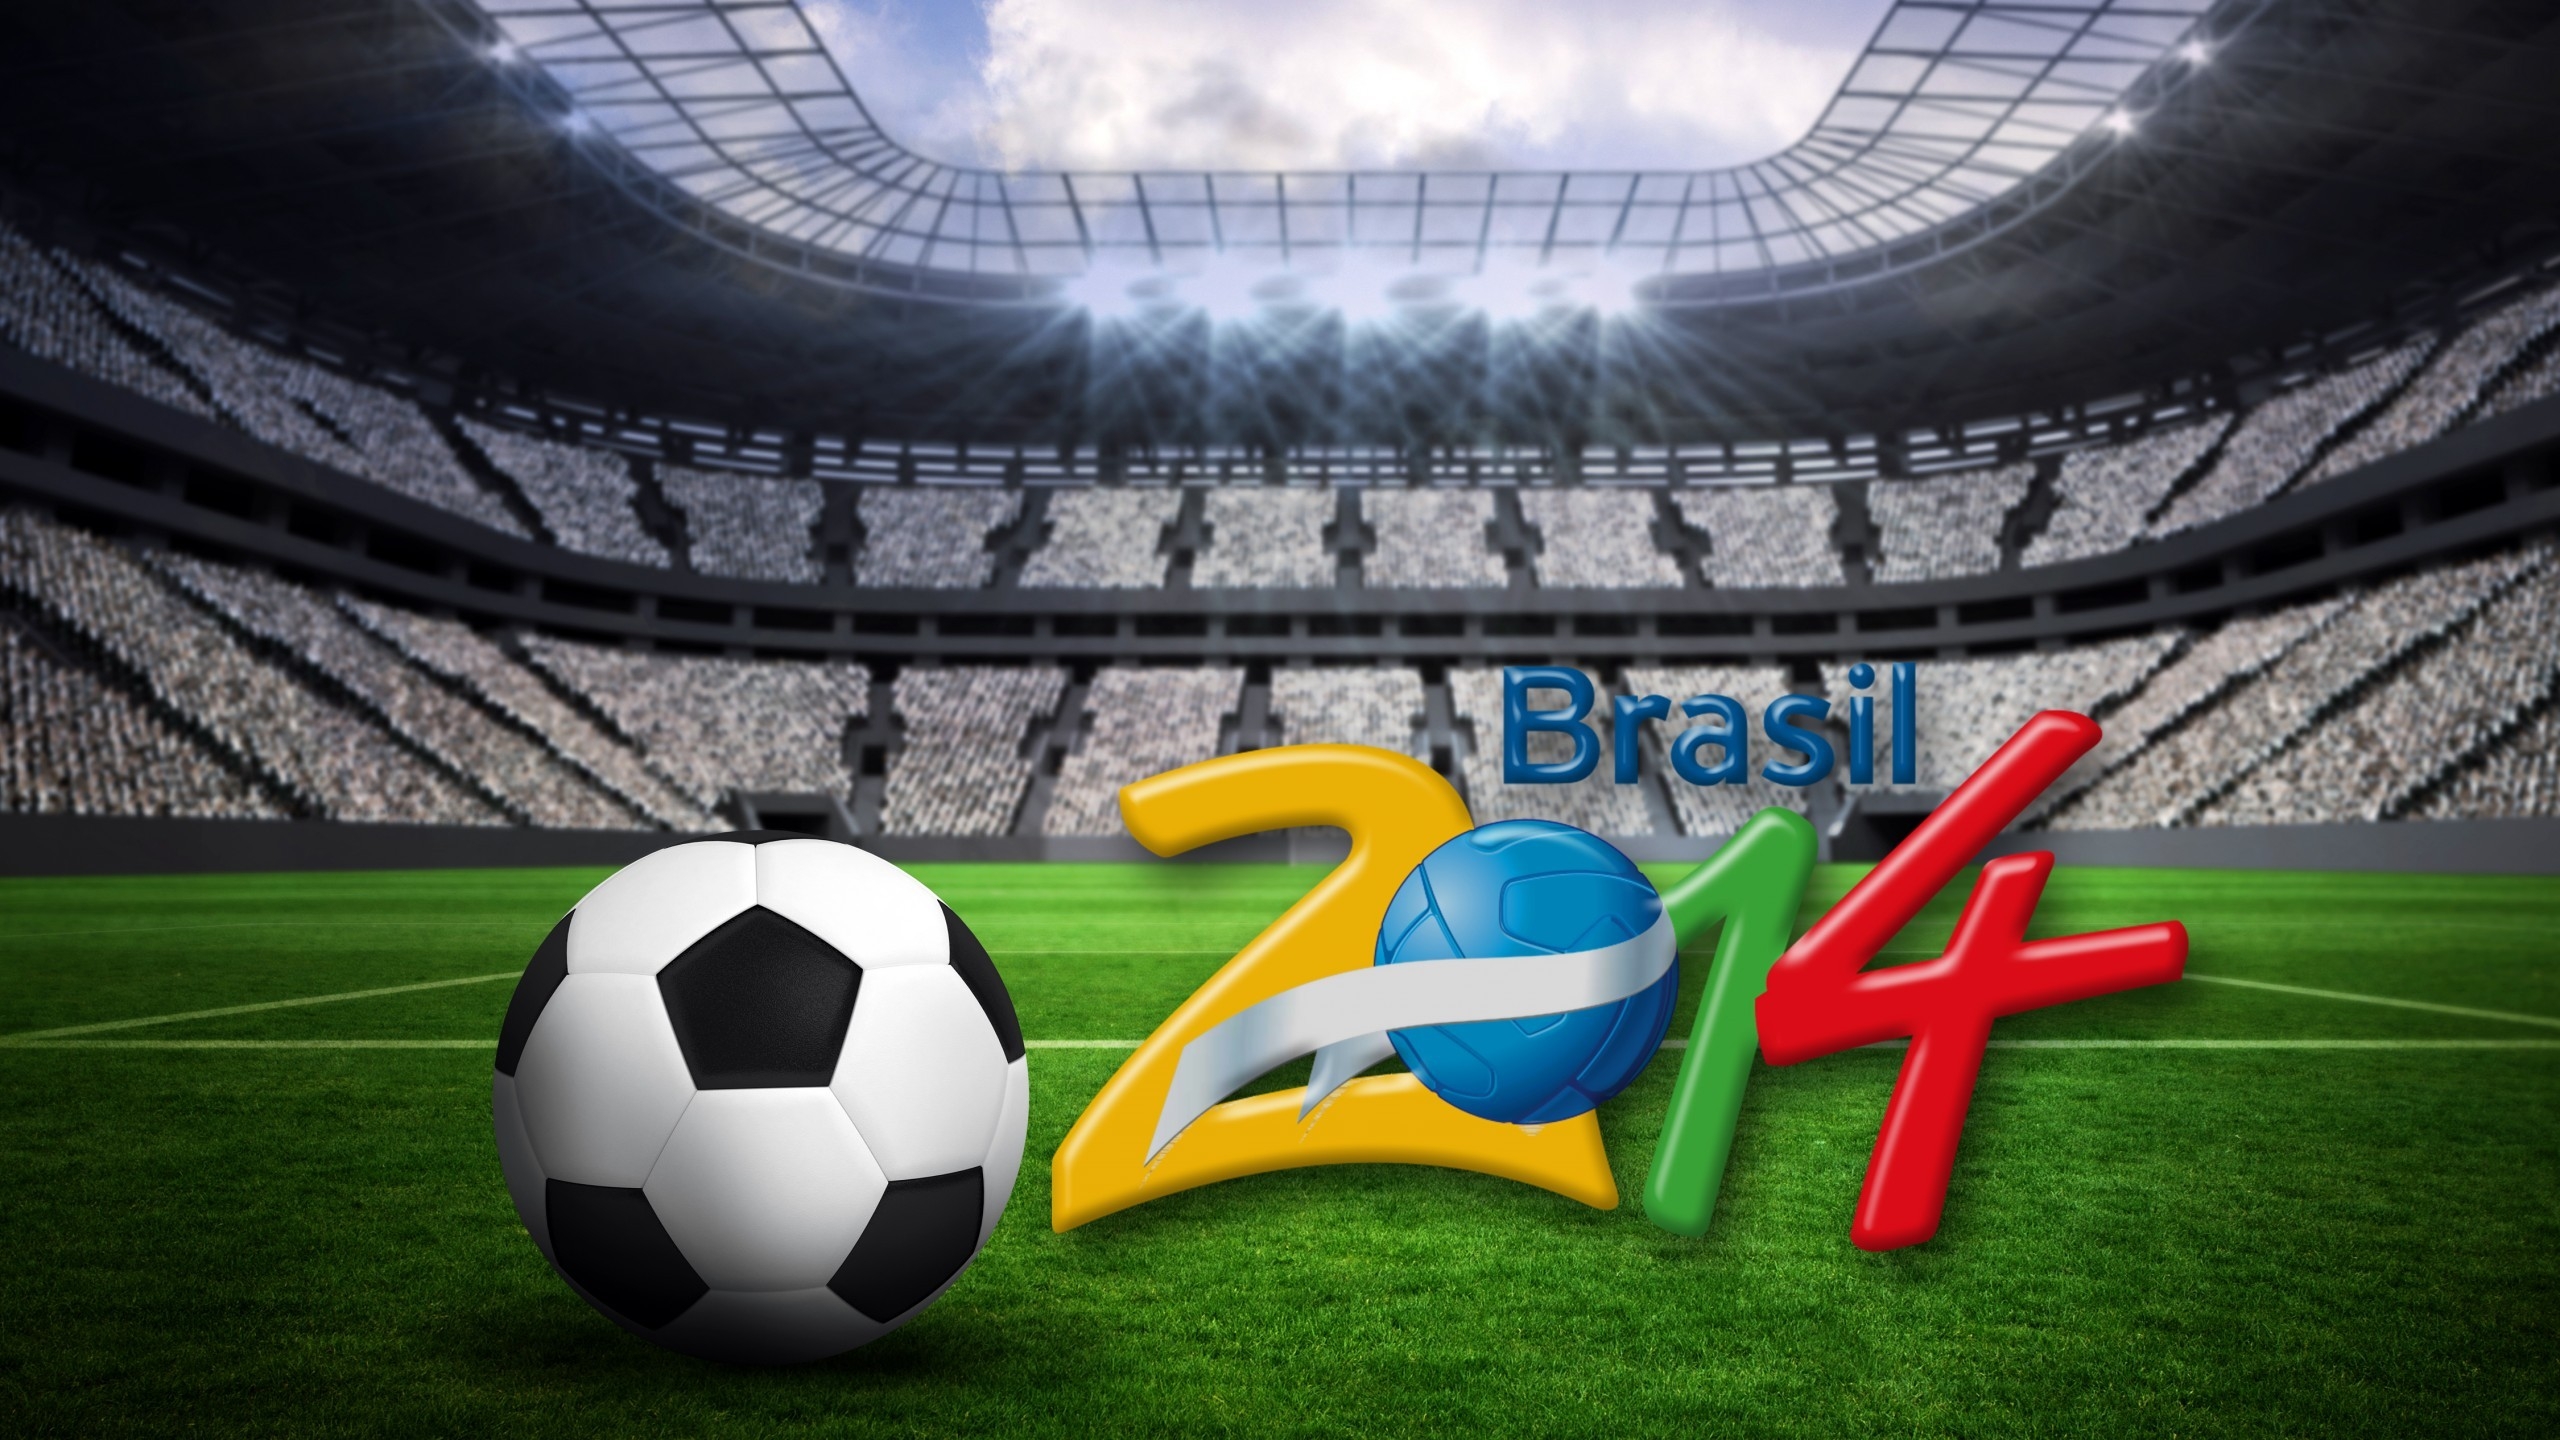 Brasil World Cup 2014 for 2560x1440 HDTV resolution